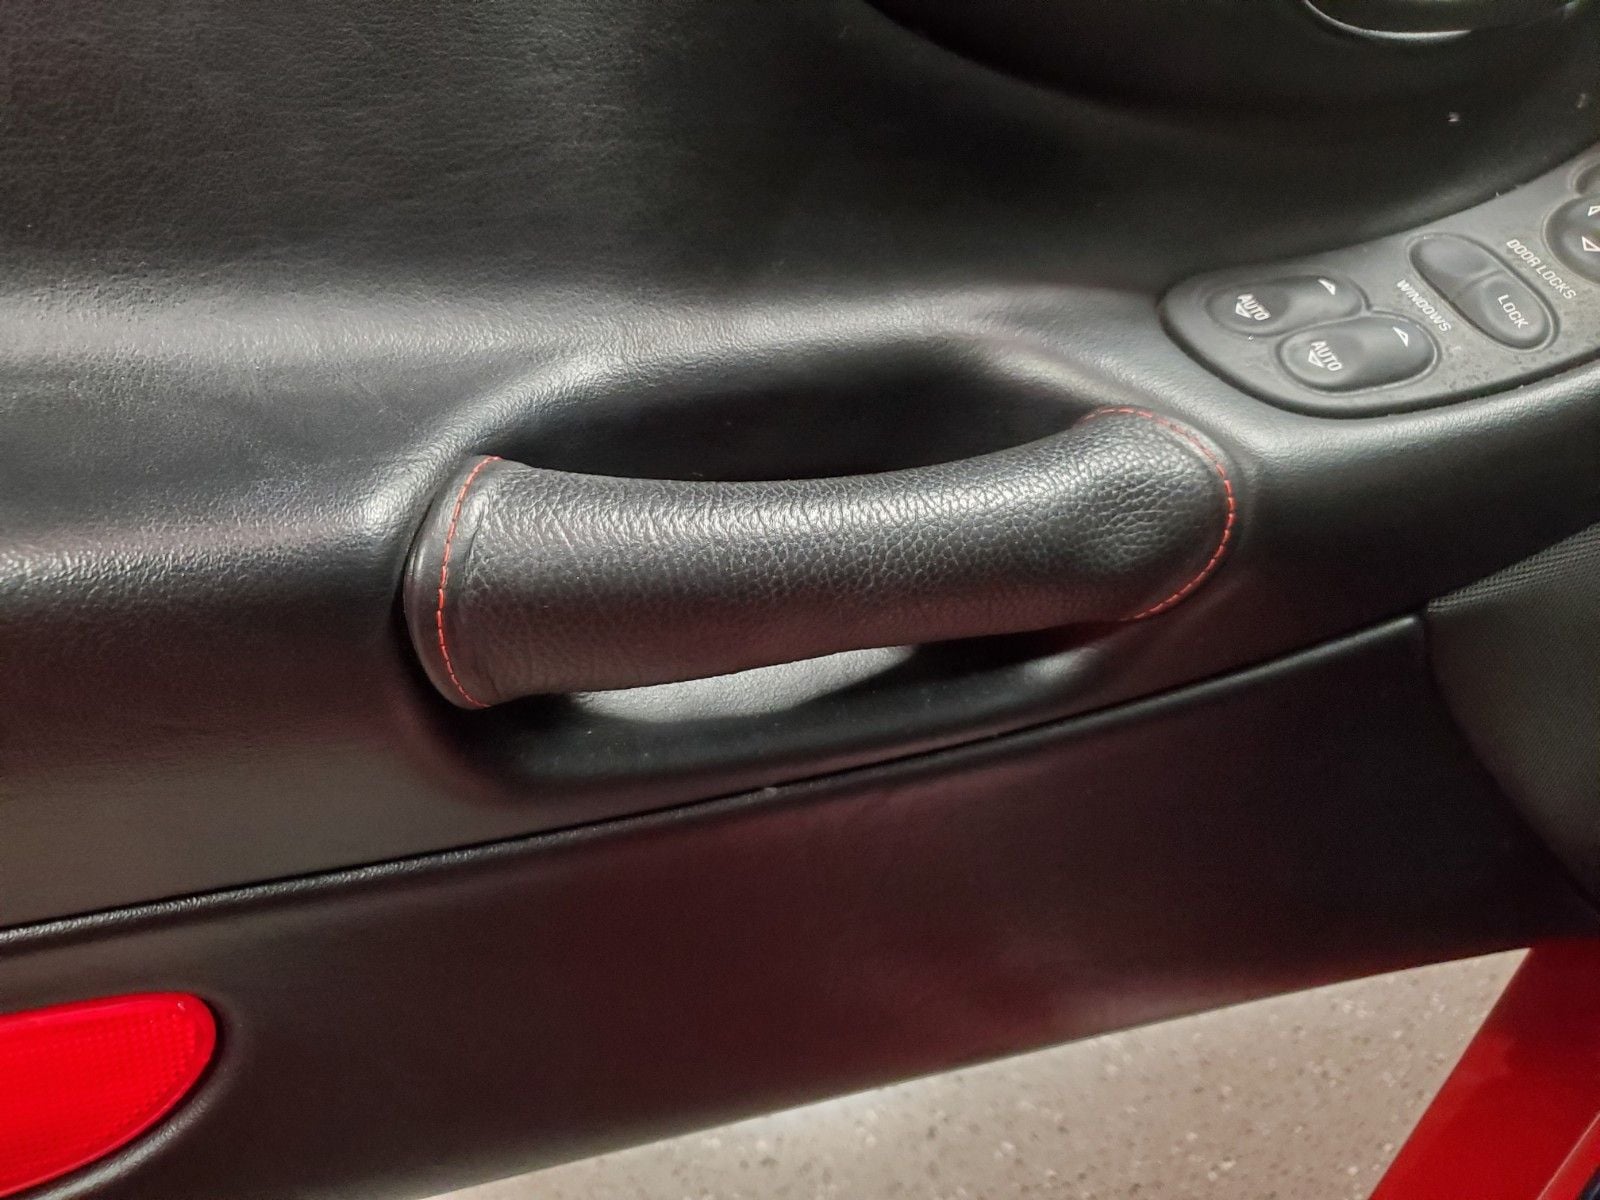  - Redline Goods Black/Red Leather Interior Accessories for C5 Corvette w/ Armrest Assy - Tucson, AZ 85712, United States